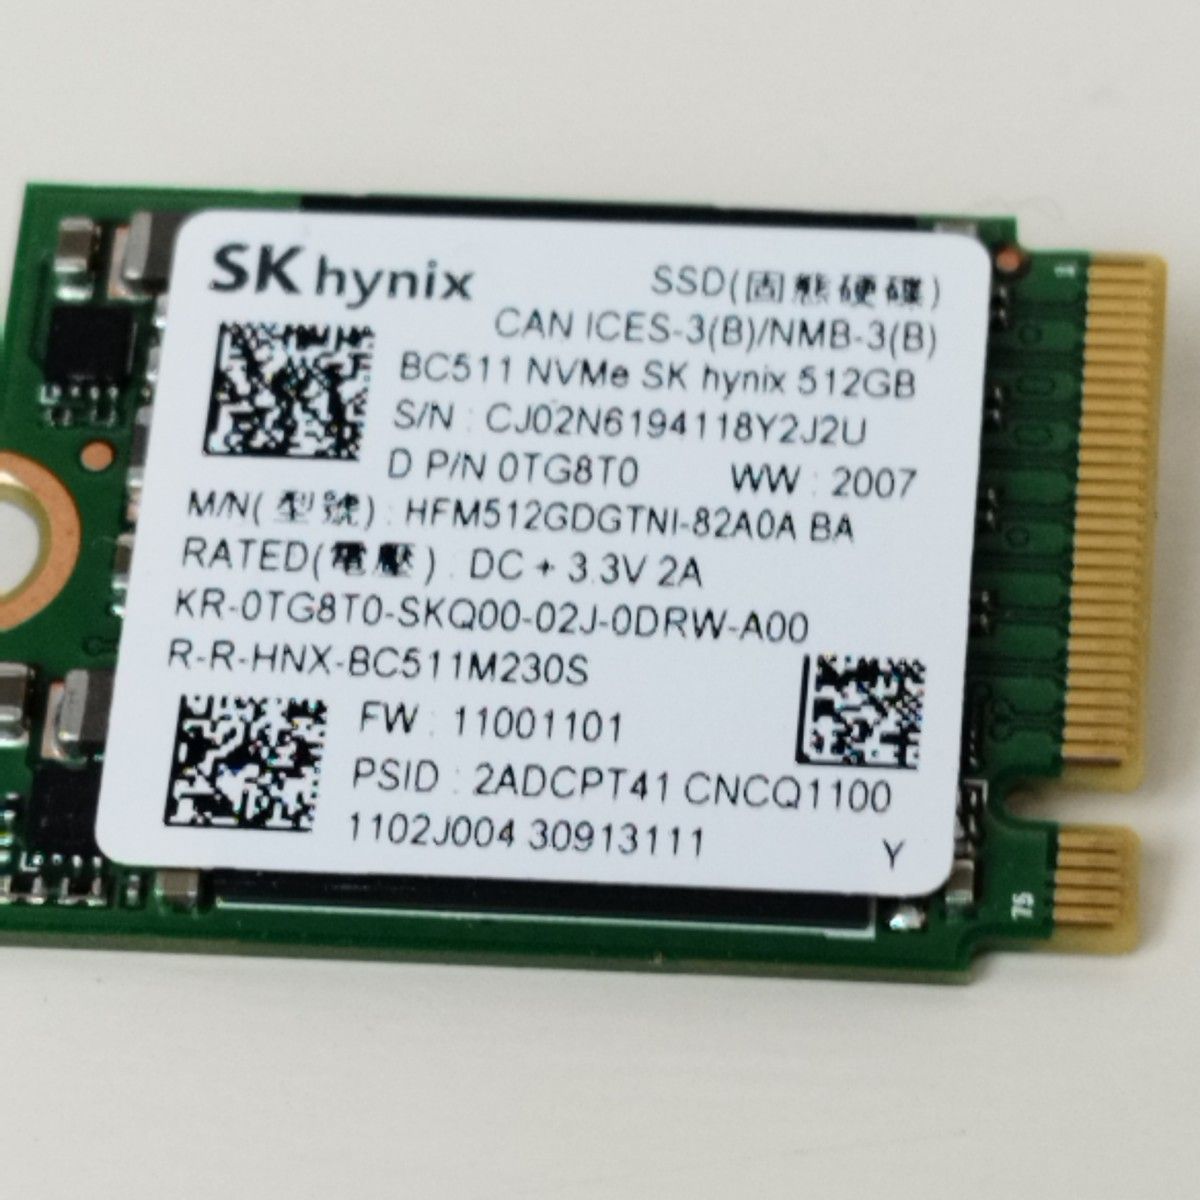 SK hynix M.2 NVMe SSD BC511 512GB type2230 100%正常判定